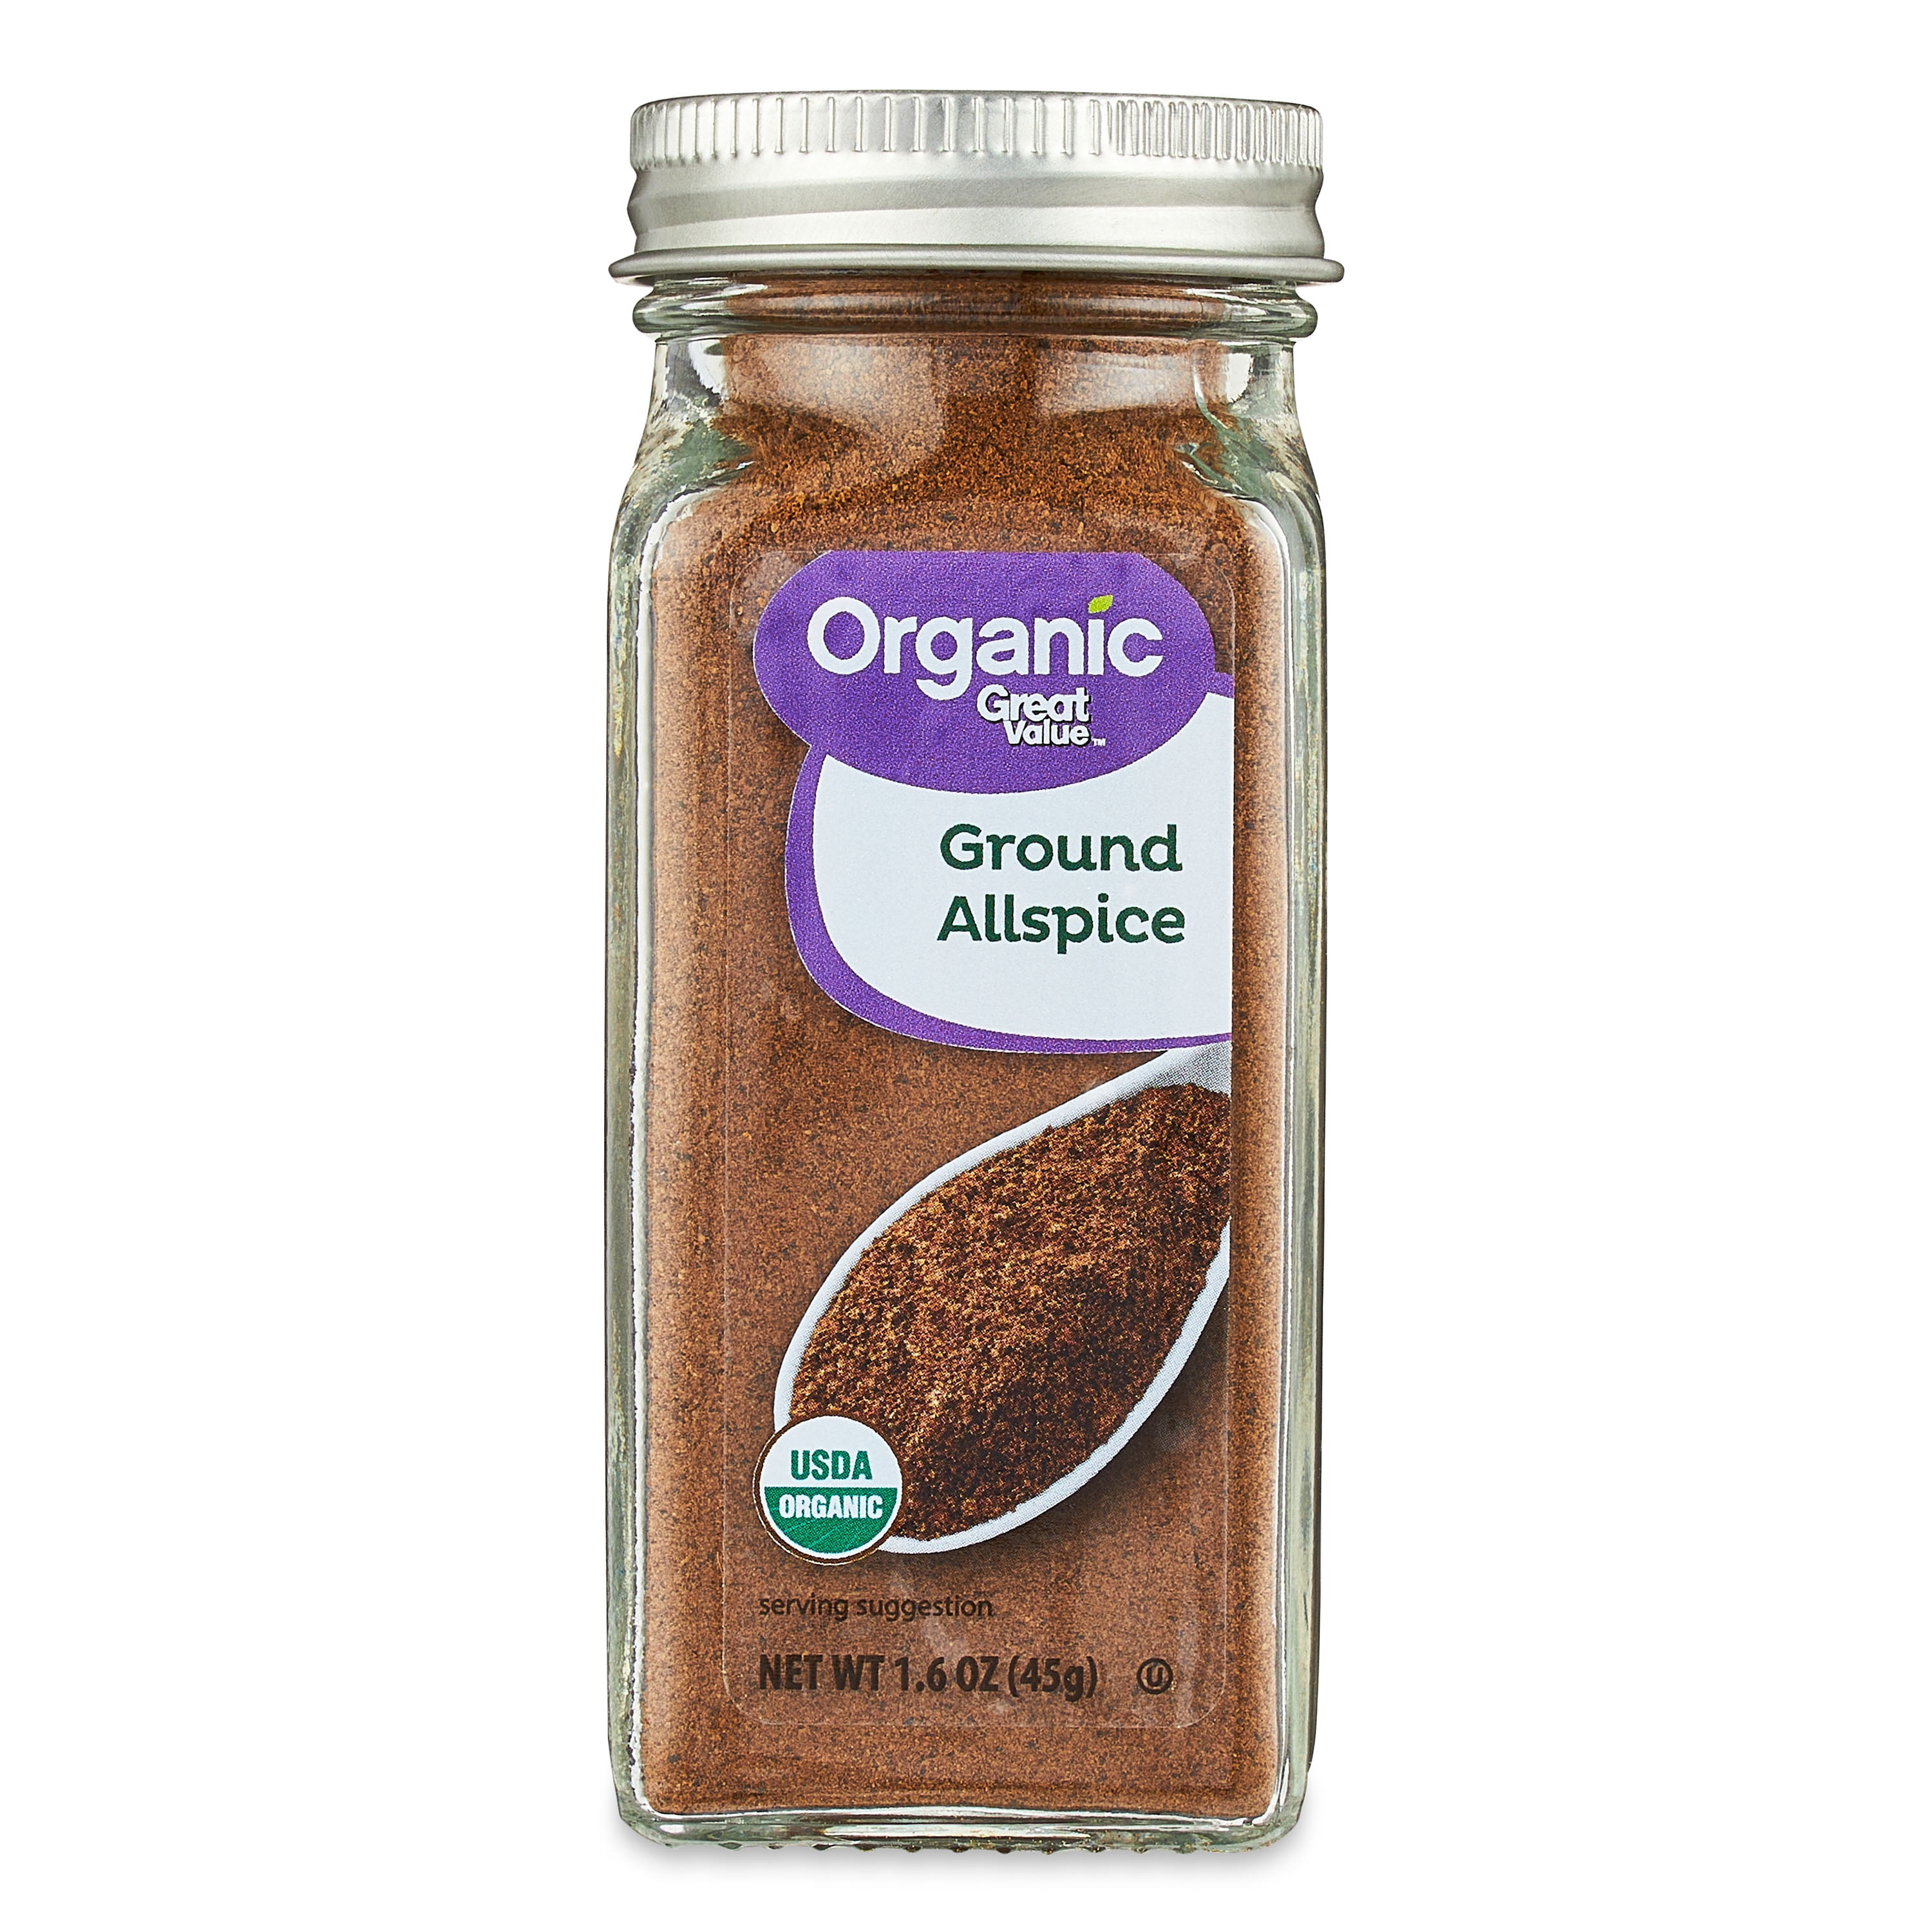 Great Value Organic Ground Allspice - 1.6 oz